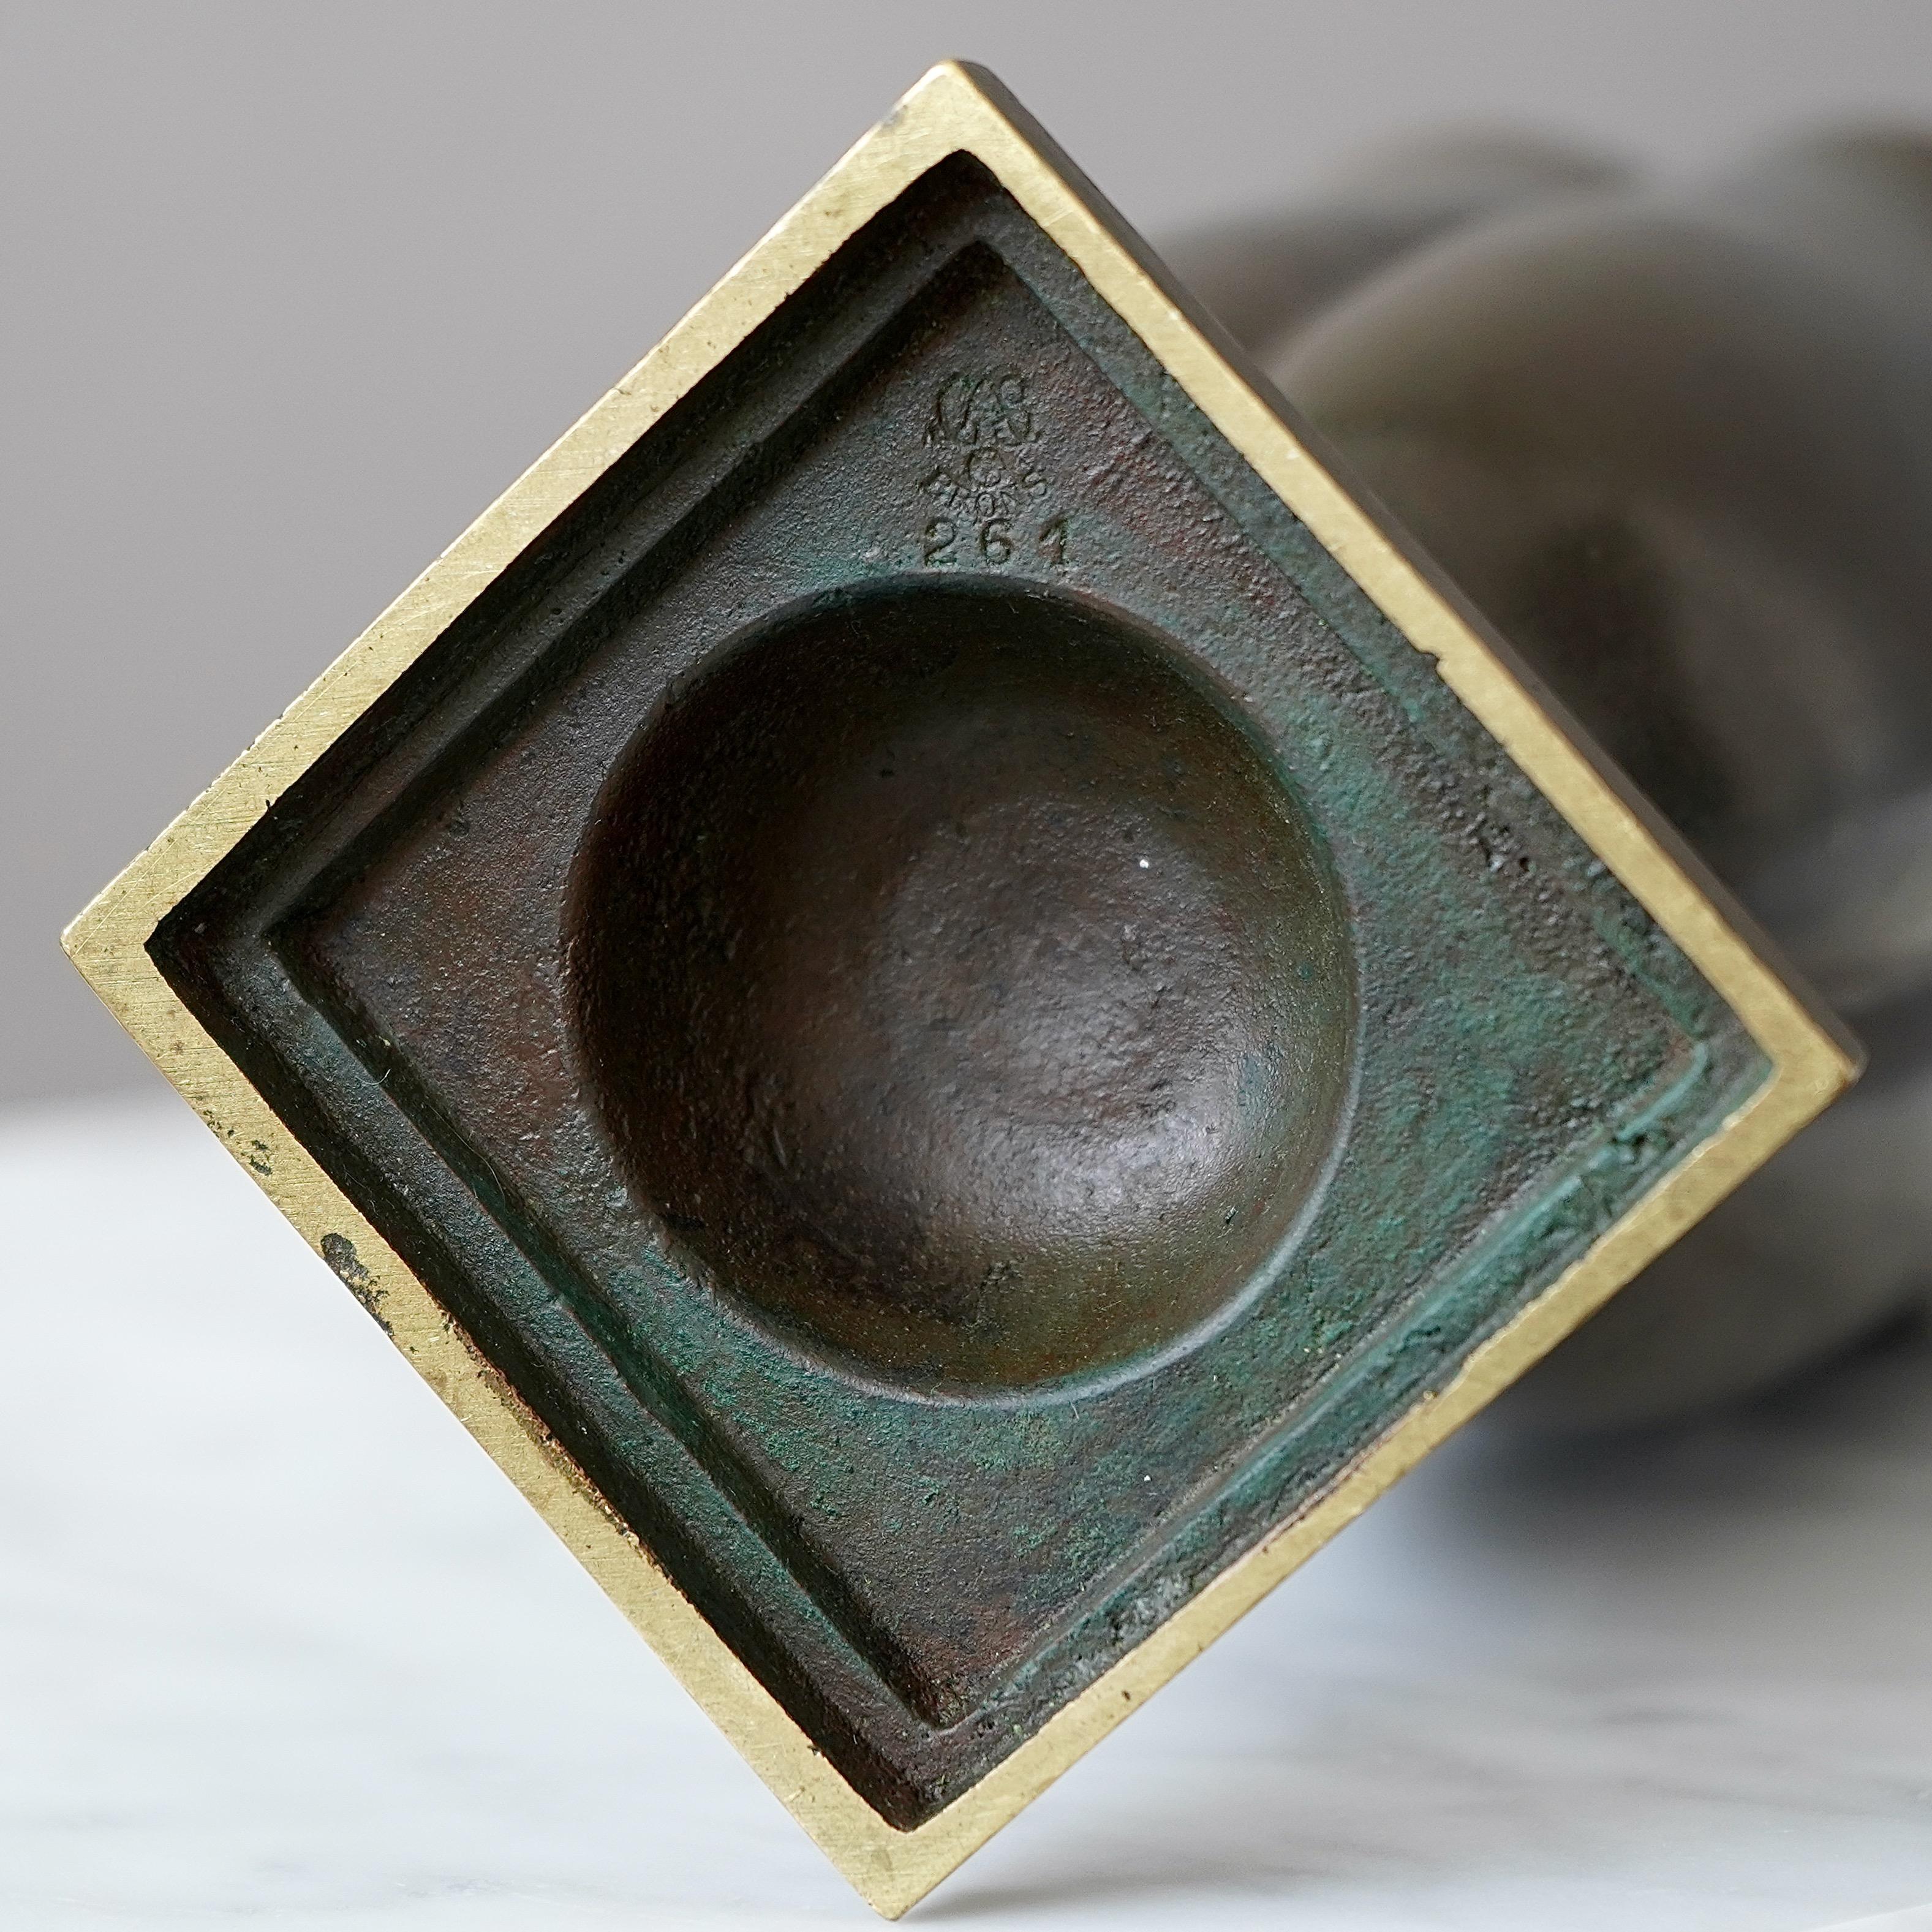 Mid-20th Century Bronze Art Deco Vase by GAB Guldsmedsaktiebolaget, Sweden, 1930s